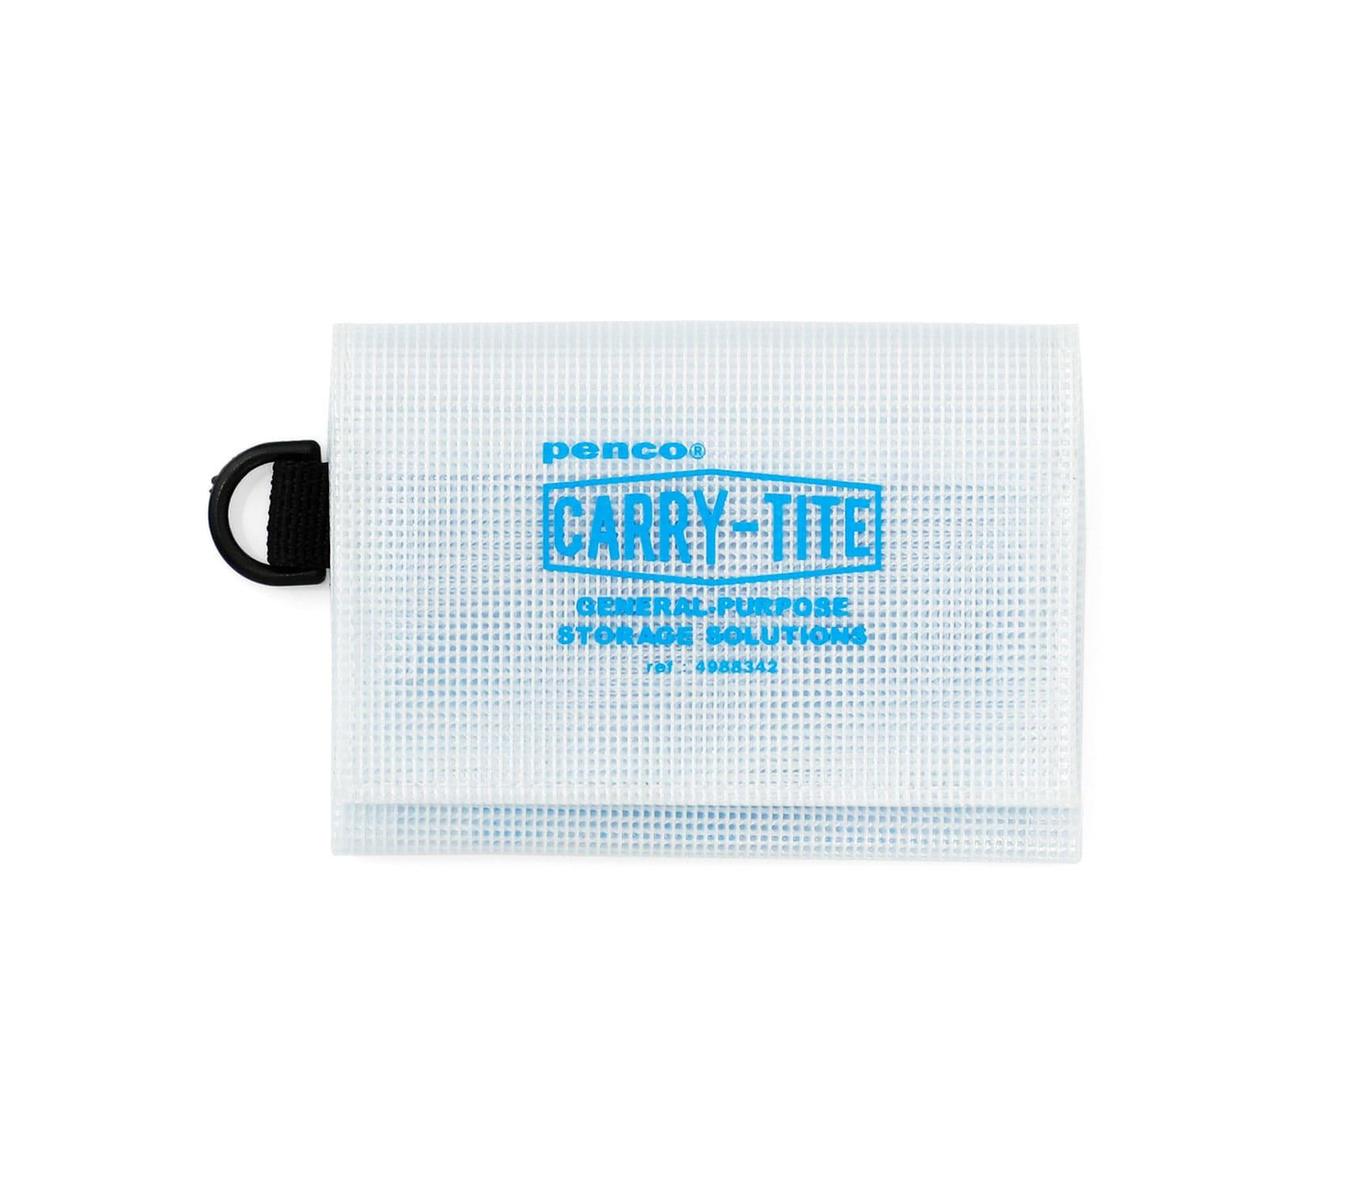 Multipurpose Carry Case - Tite Penco small